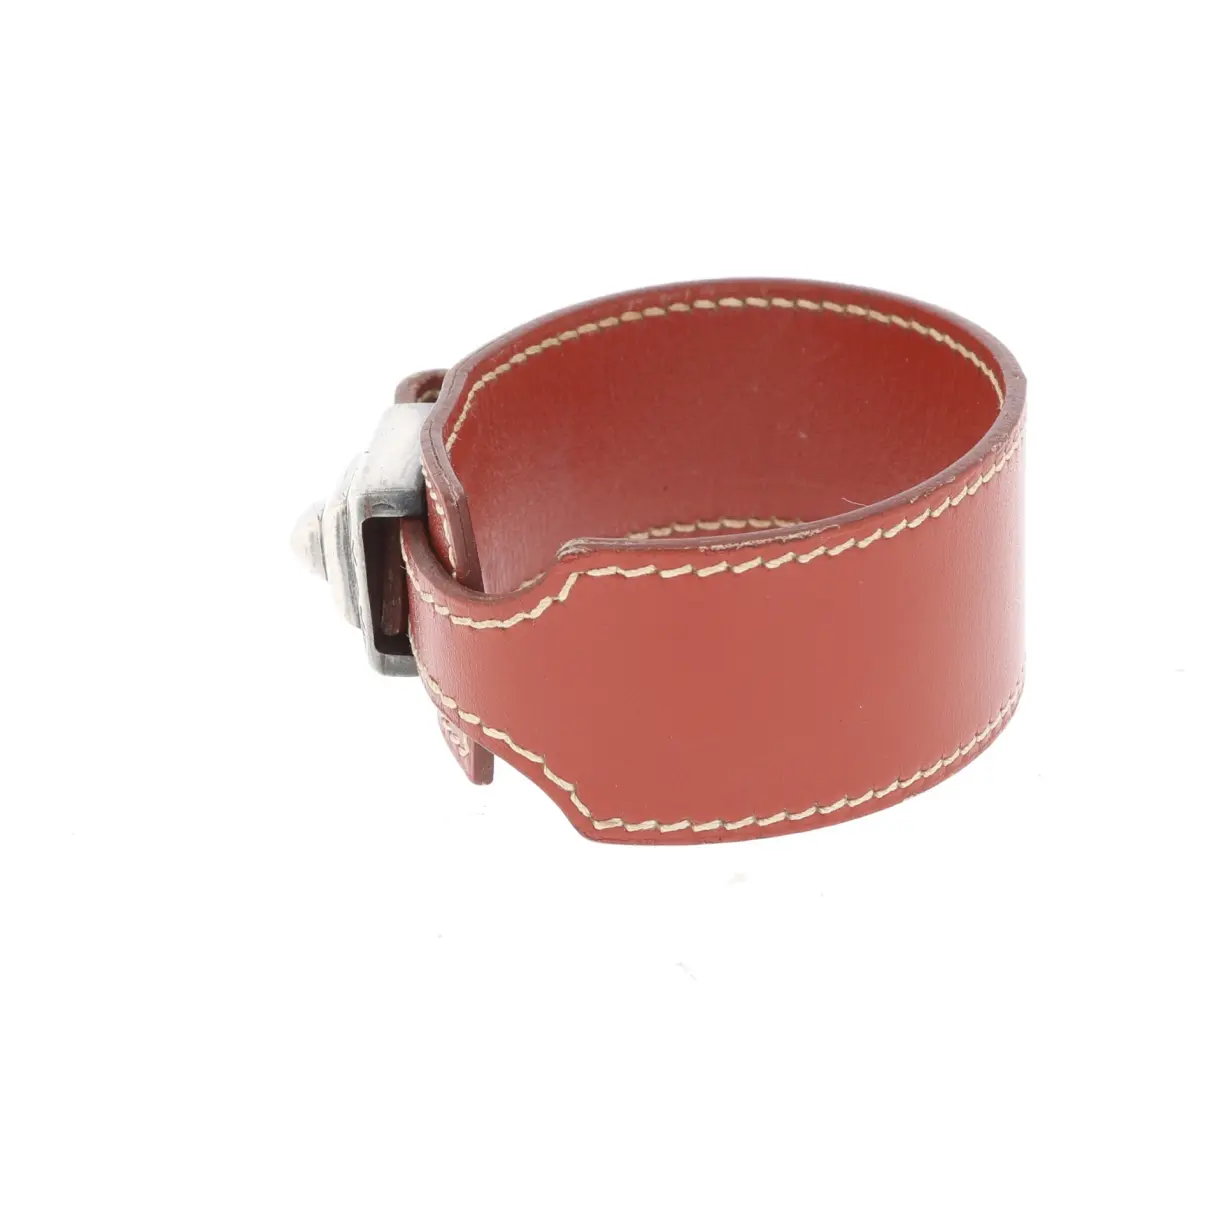 Buy Hermès Artemis leather bracelet online